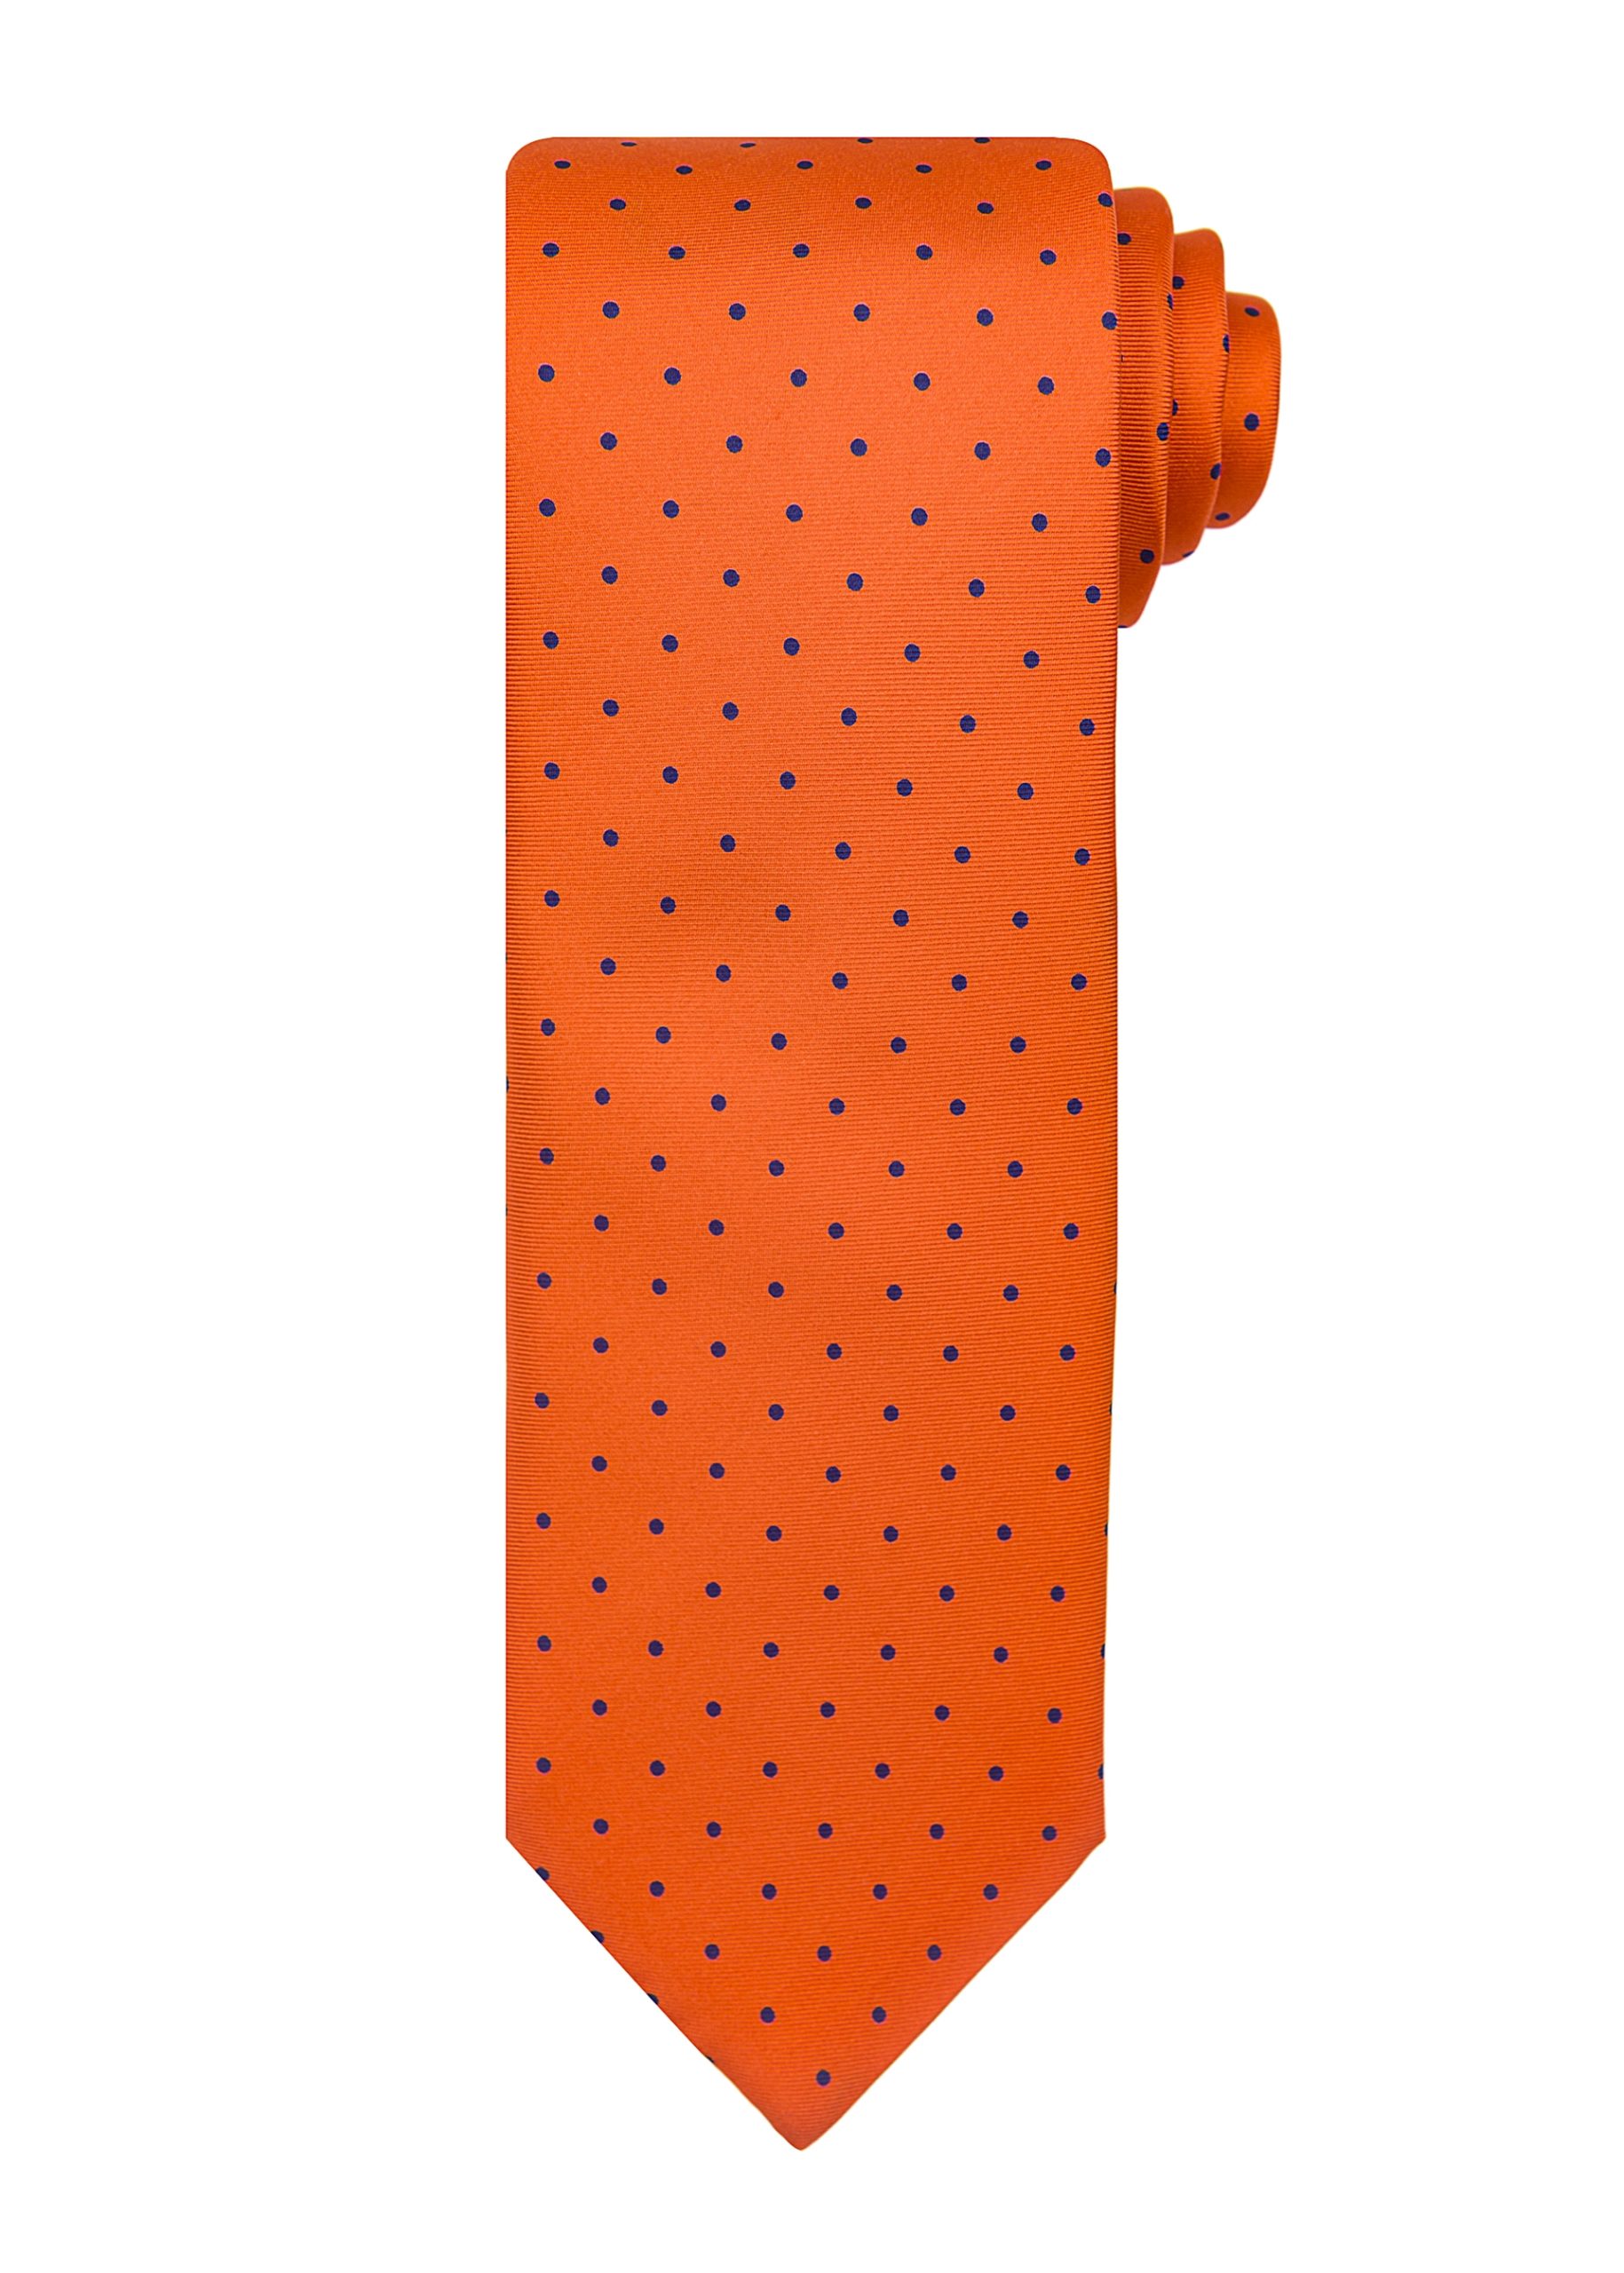 Roderick Charles orange and navy spot tie